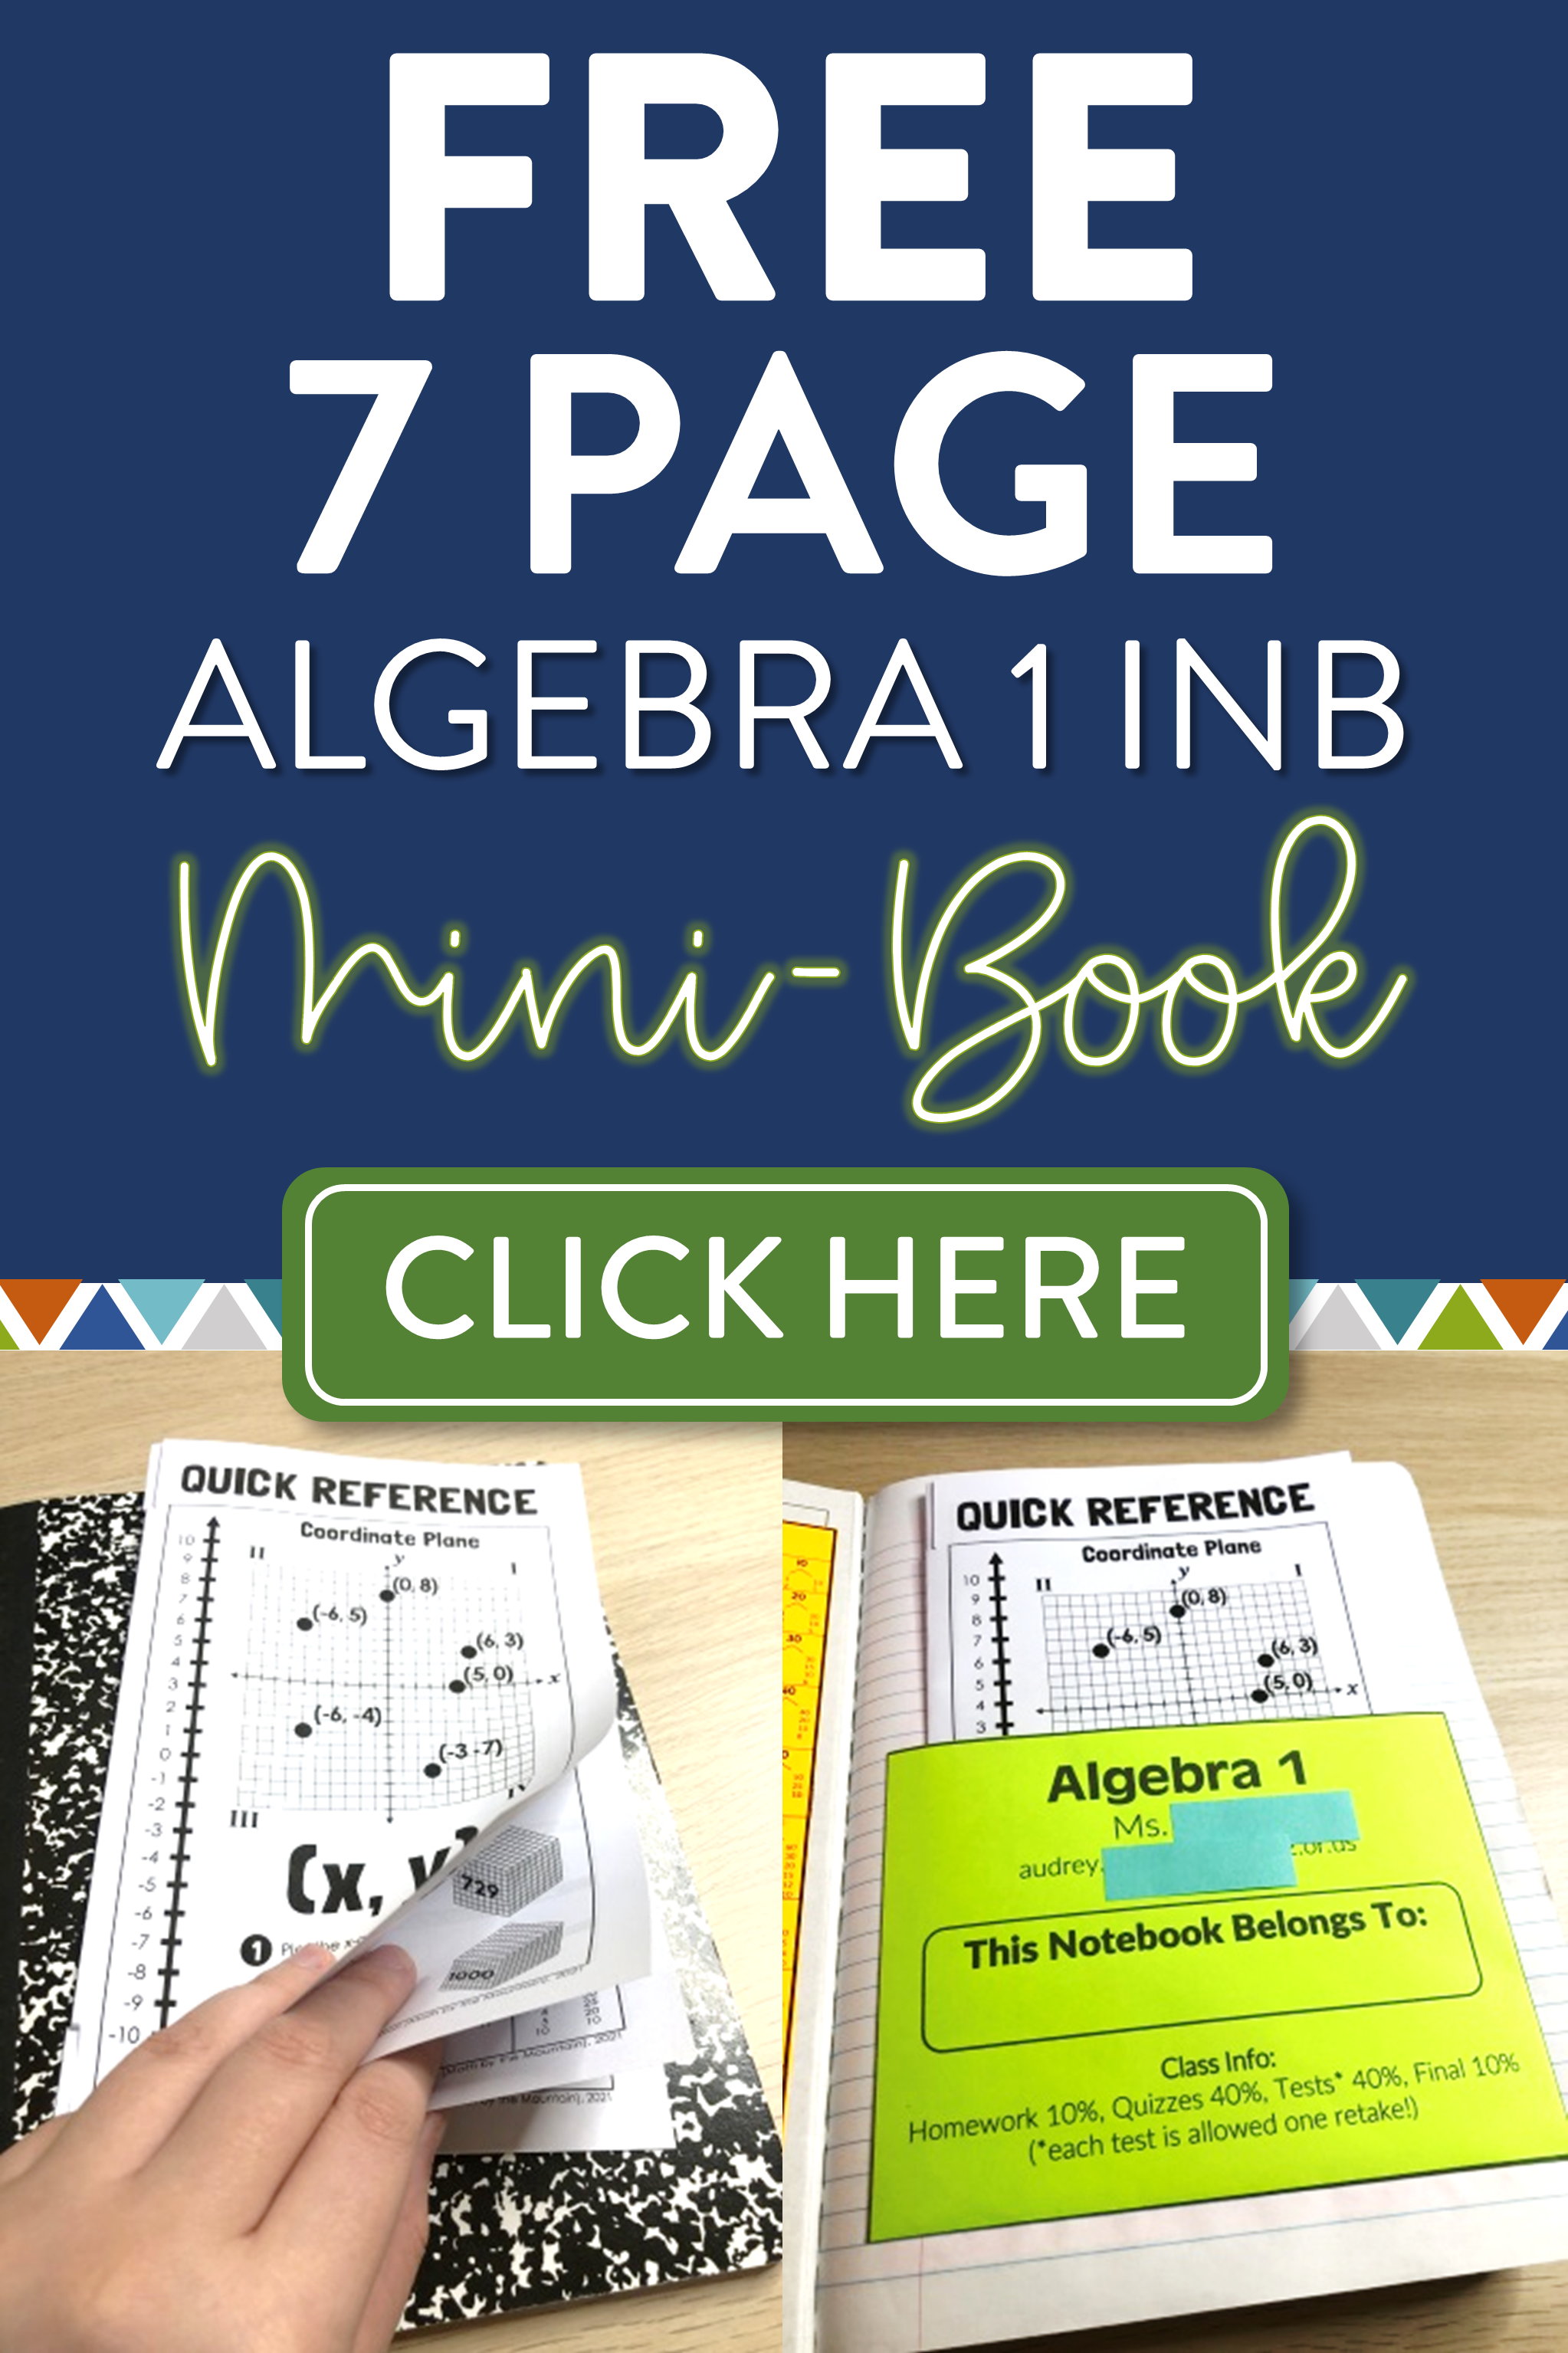 Free Download Algebra 1 Reference Mini-Book